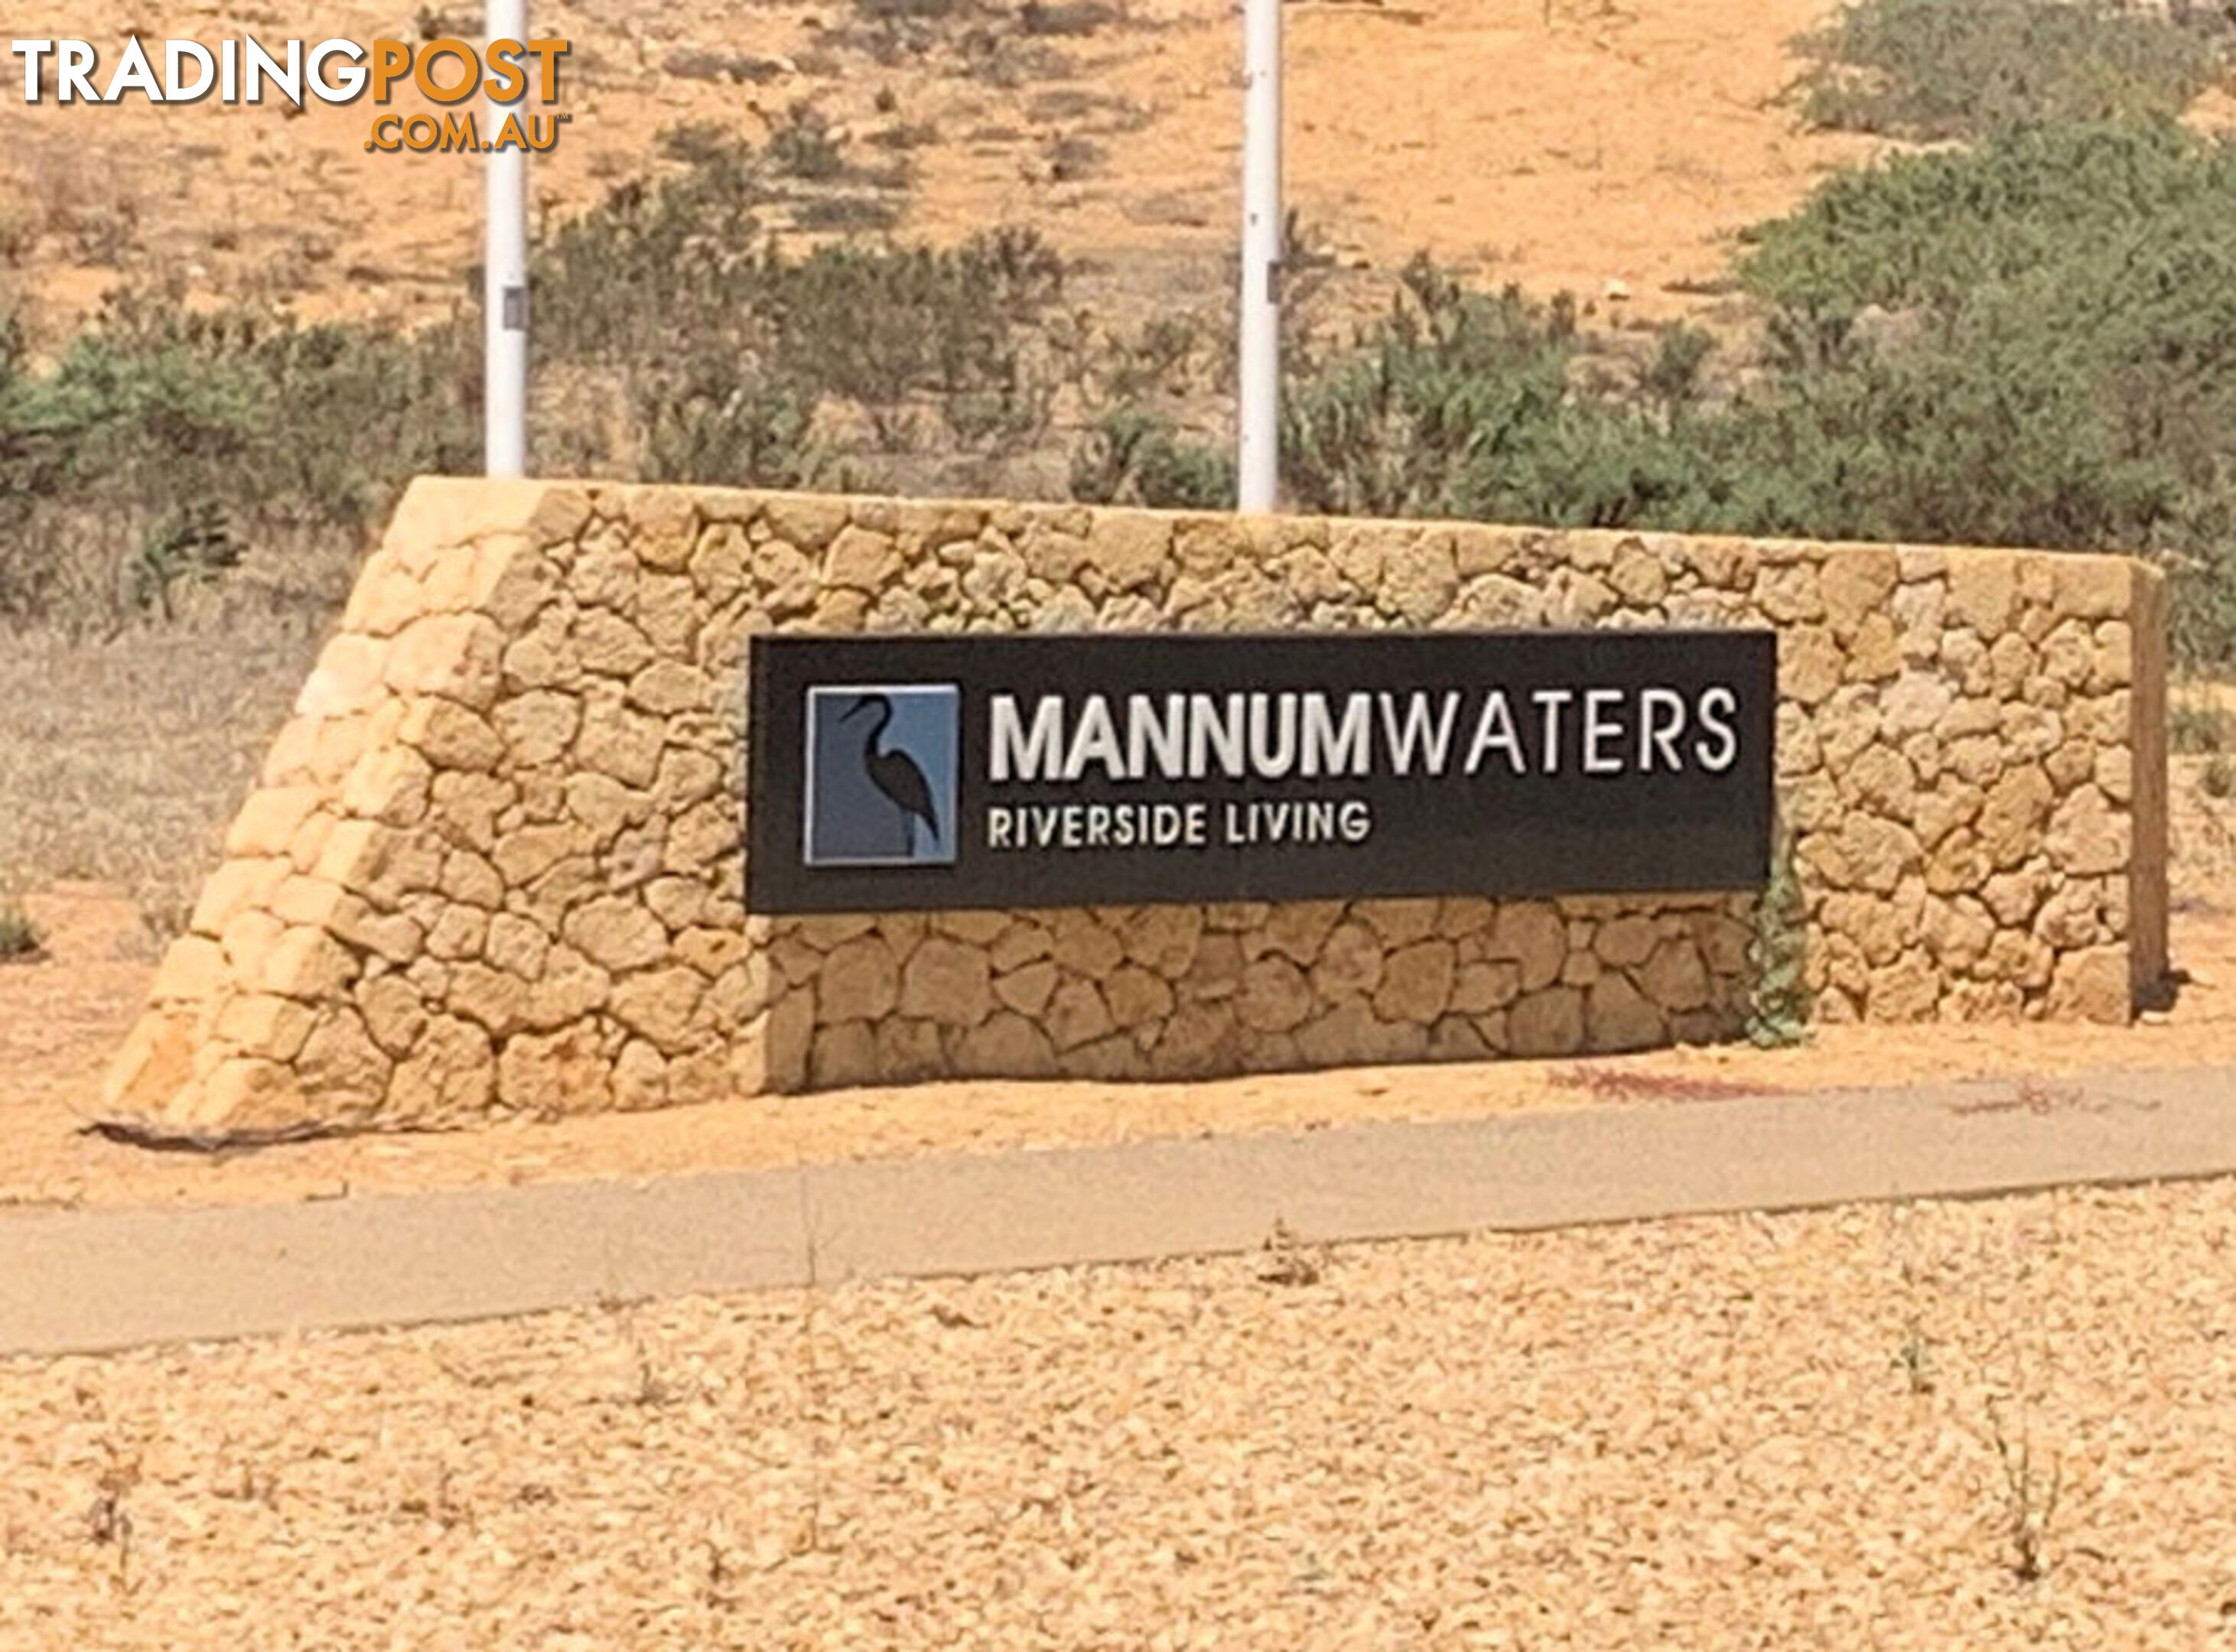 60 Marina Way, Mannum Waters Marina MANNUM SA 5238